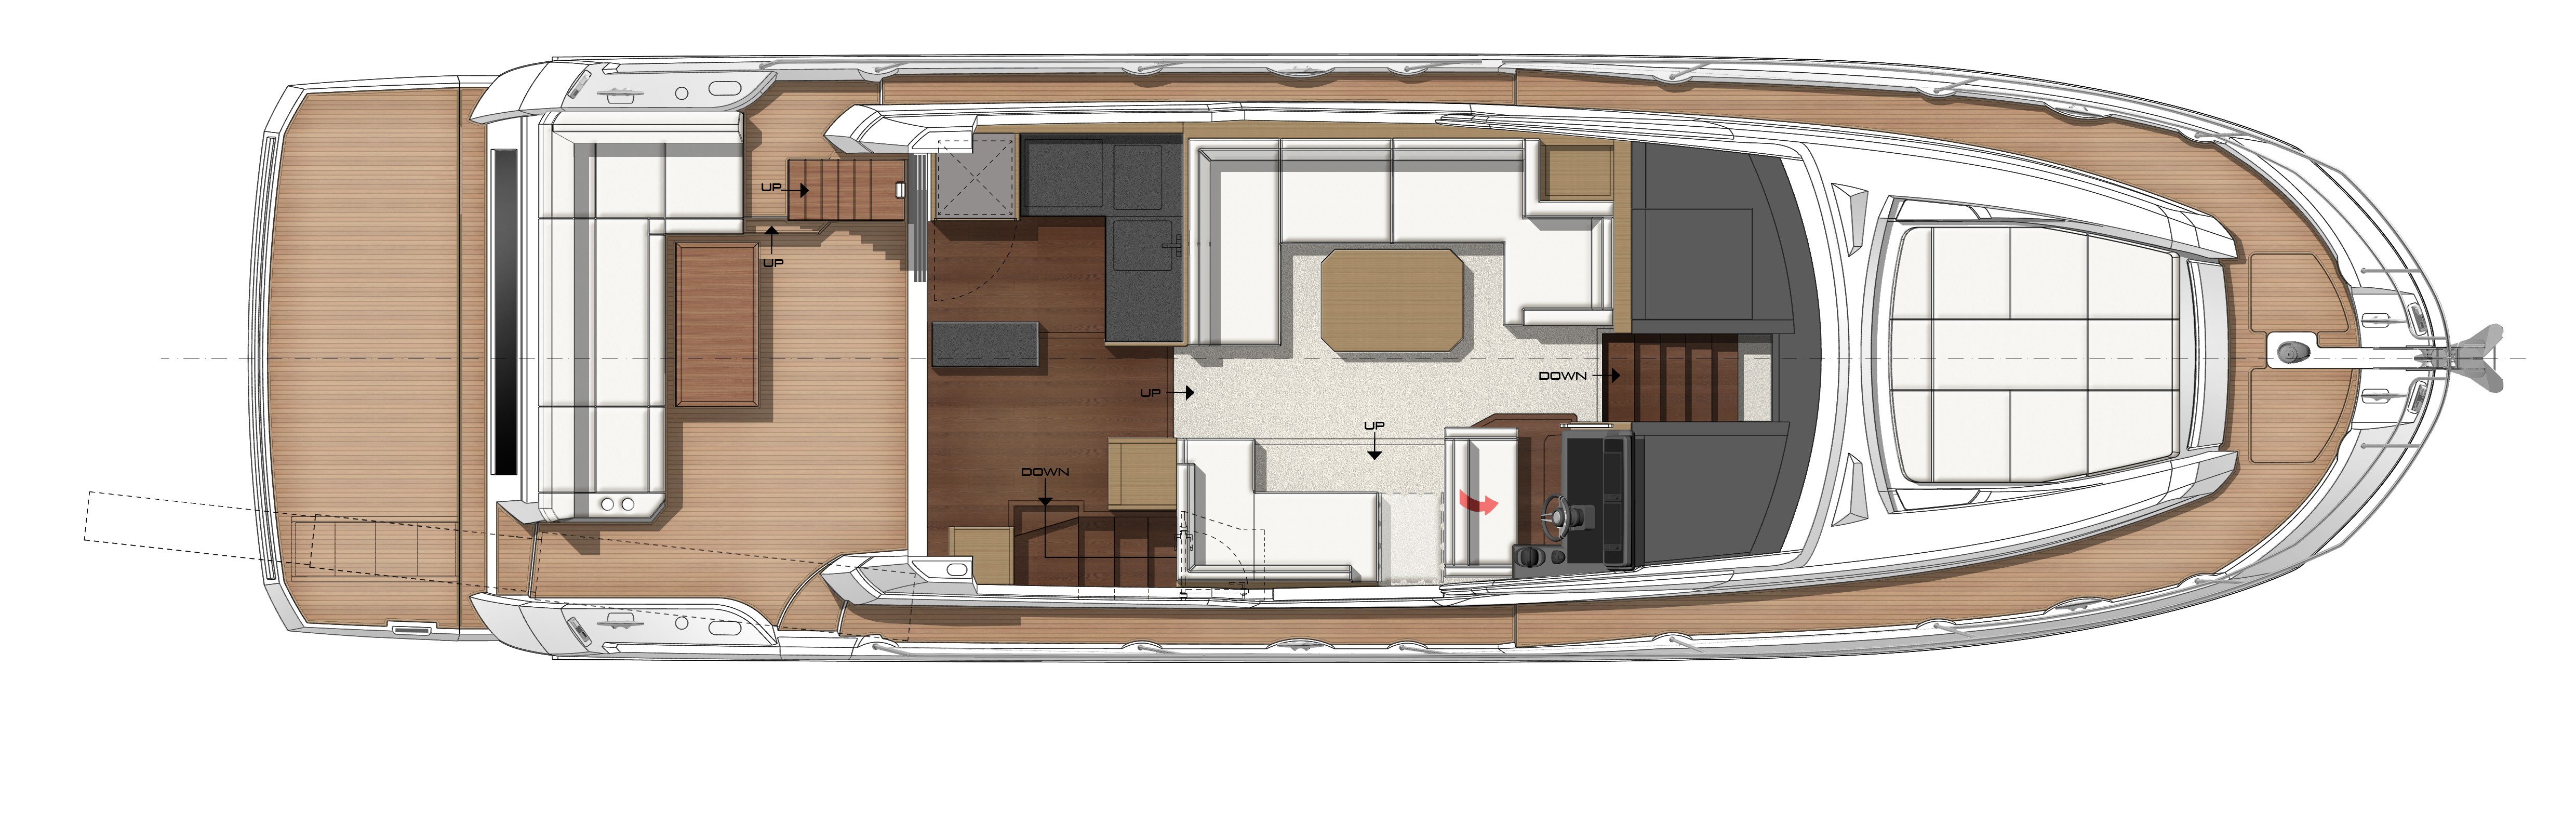 520 main deck interior